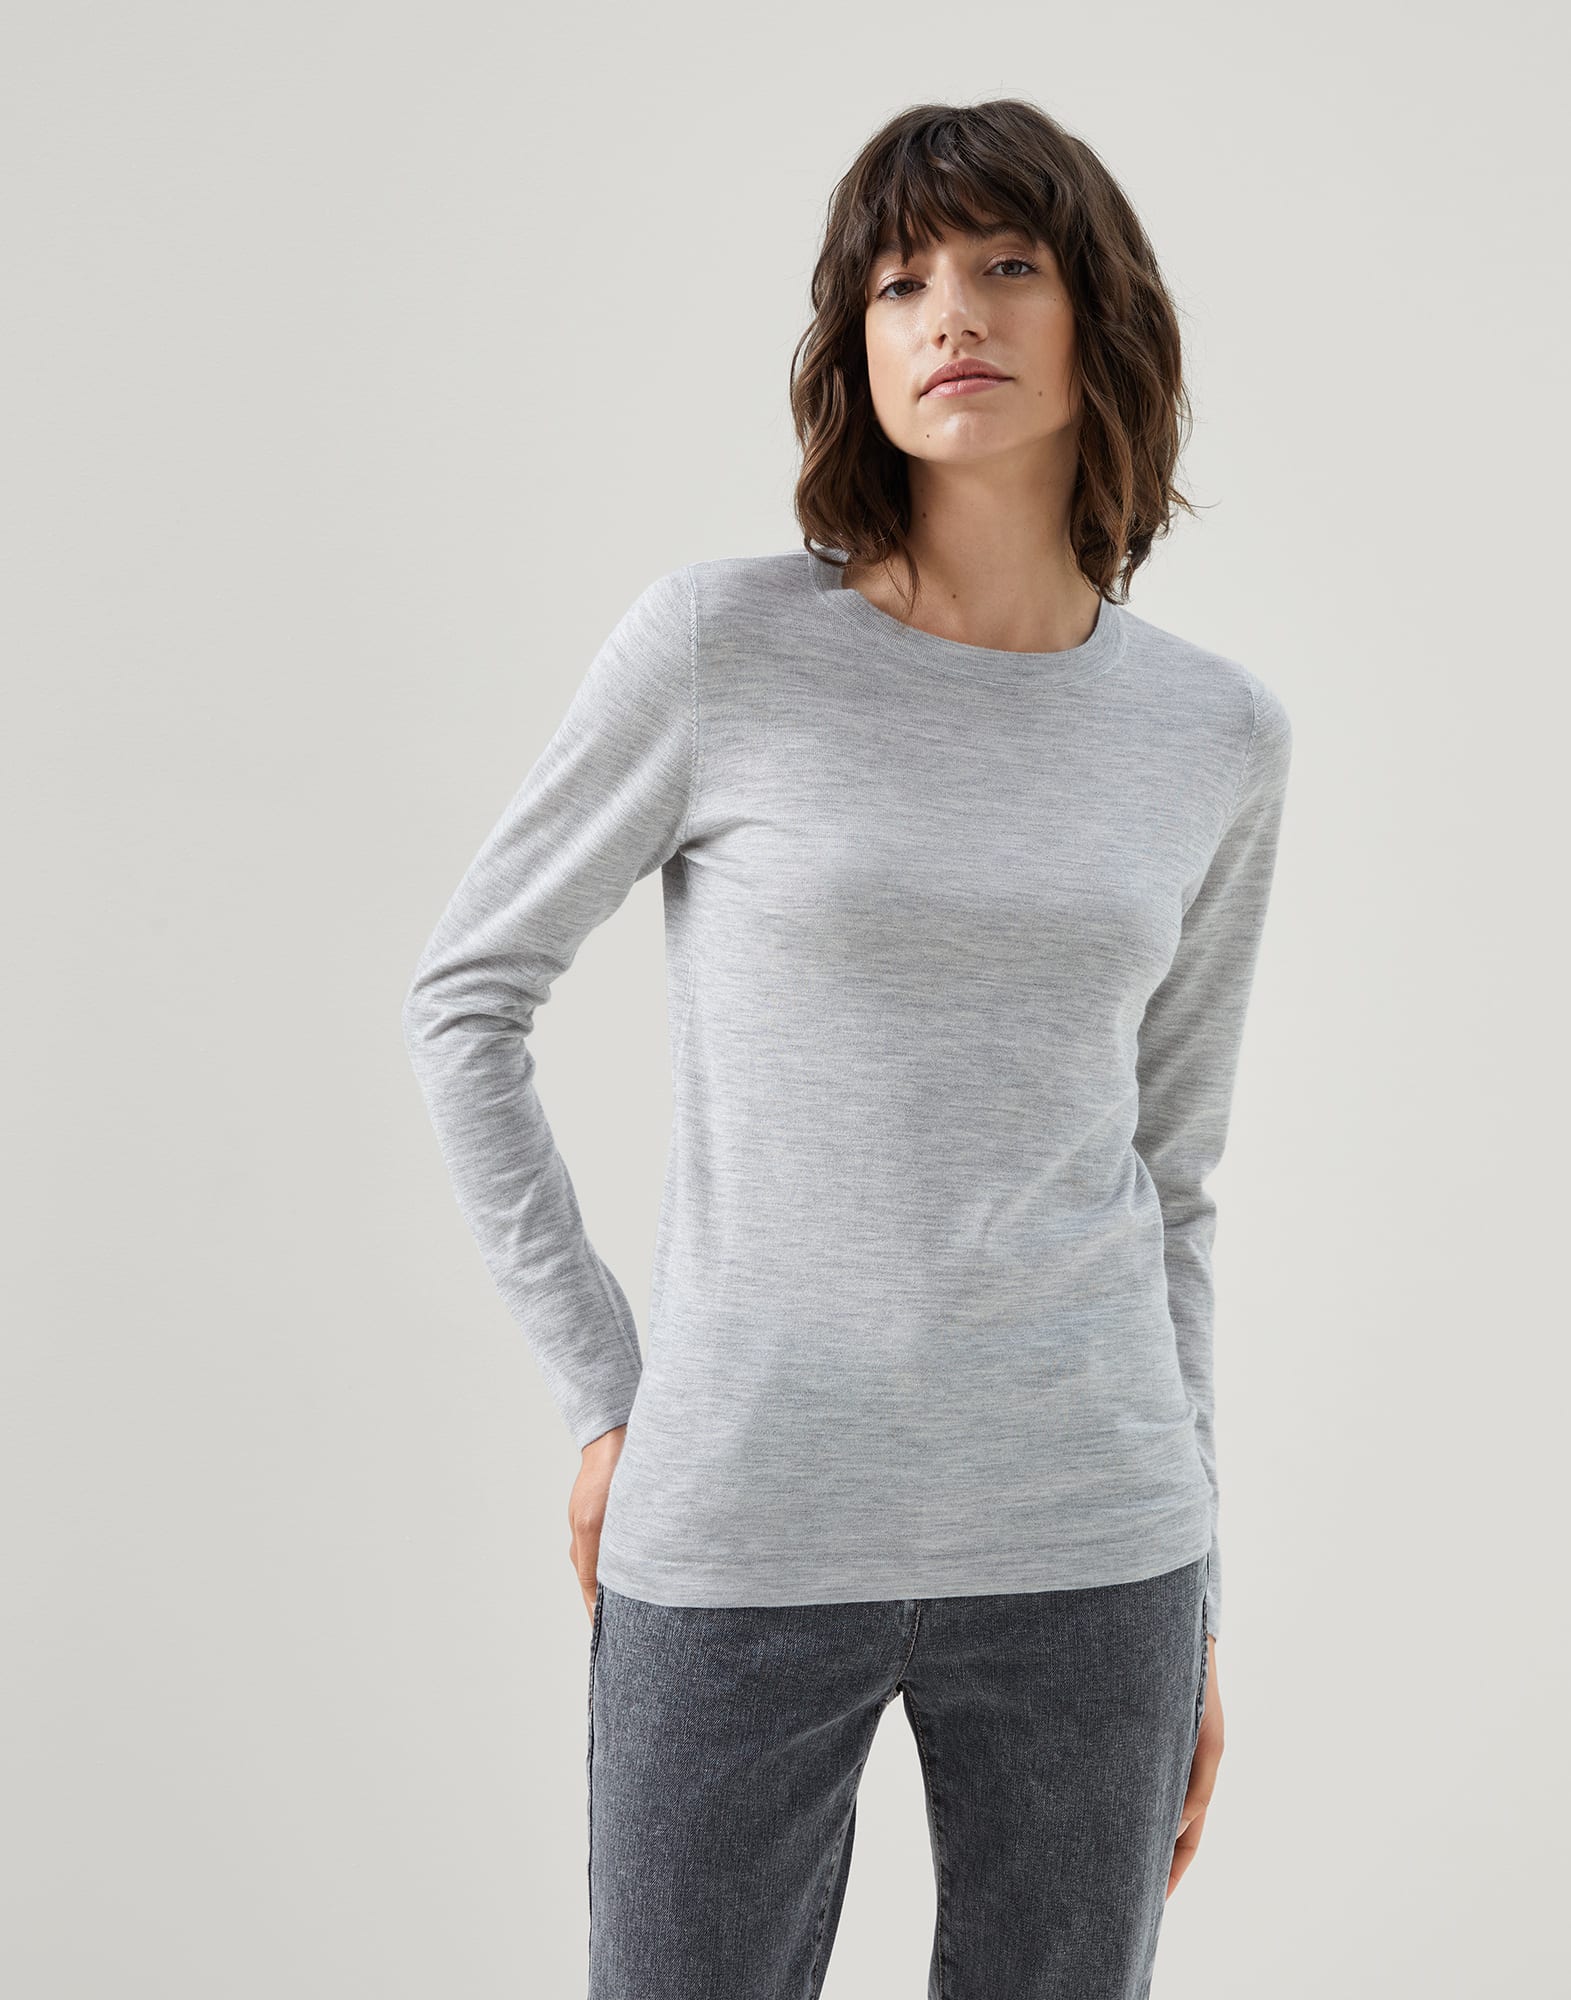 Cashmere and silk lightweight sweater